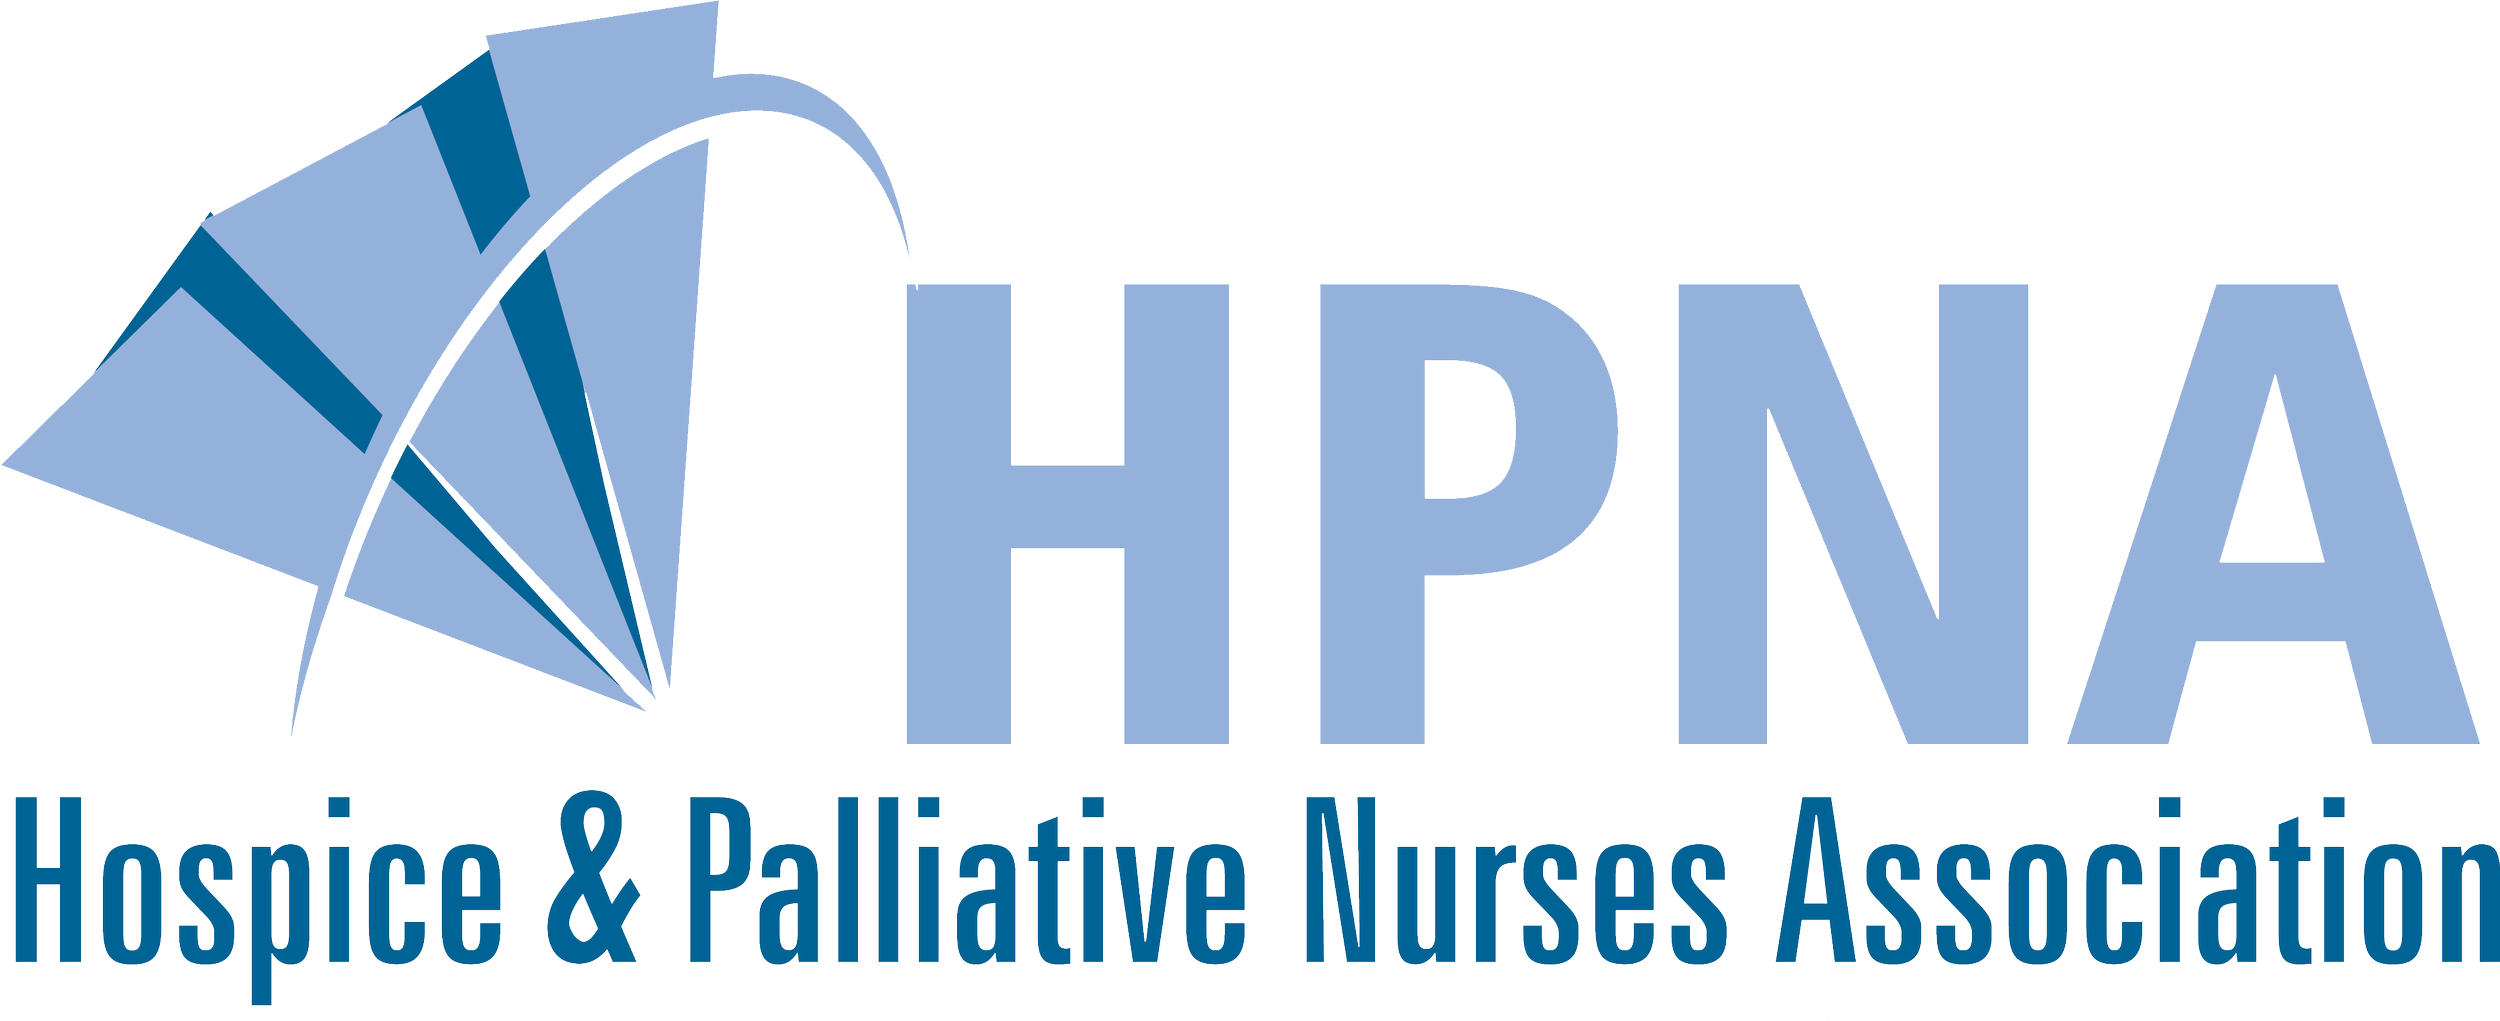 HPNA Logo - No tagline - Color.png